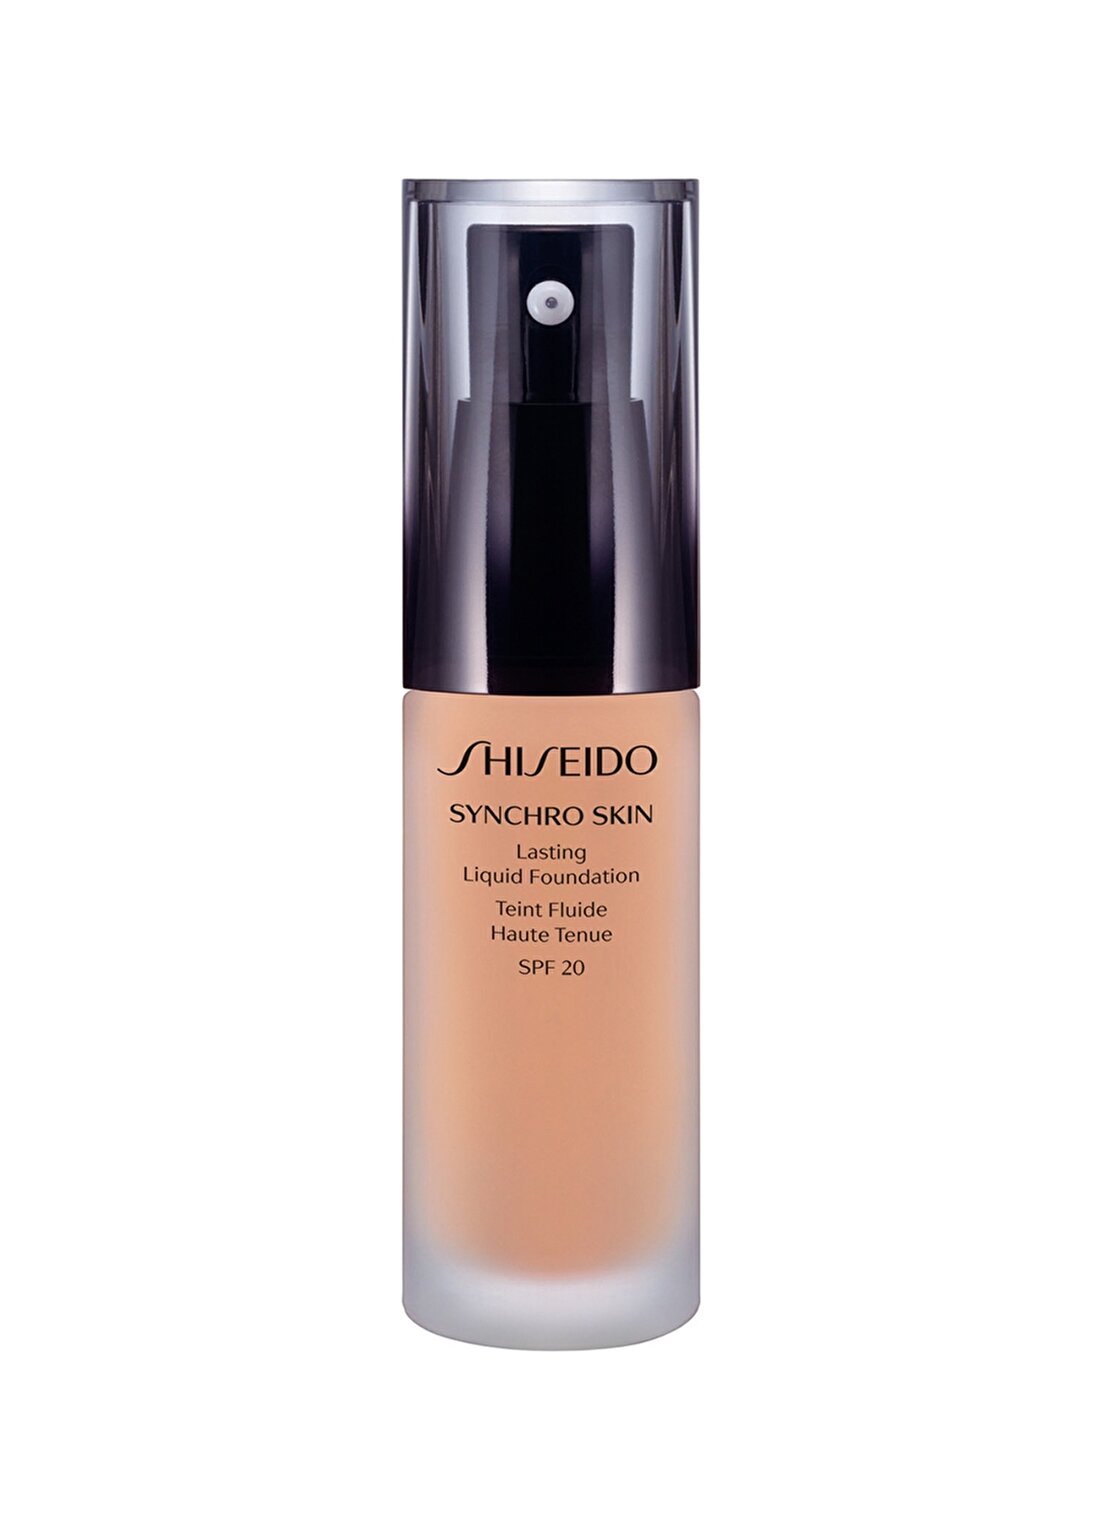 Shiseido Synchro Skin Lasting Natural 2 Fondöten